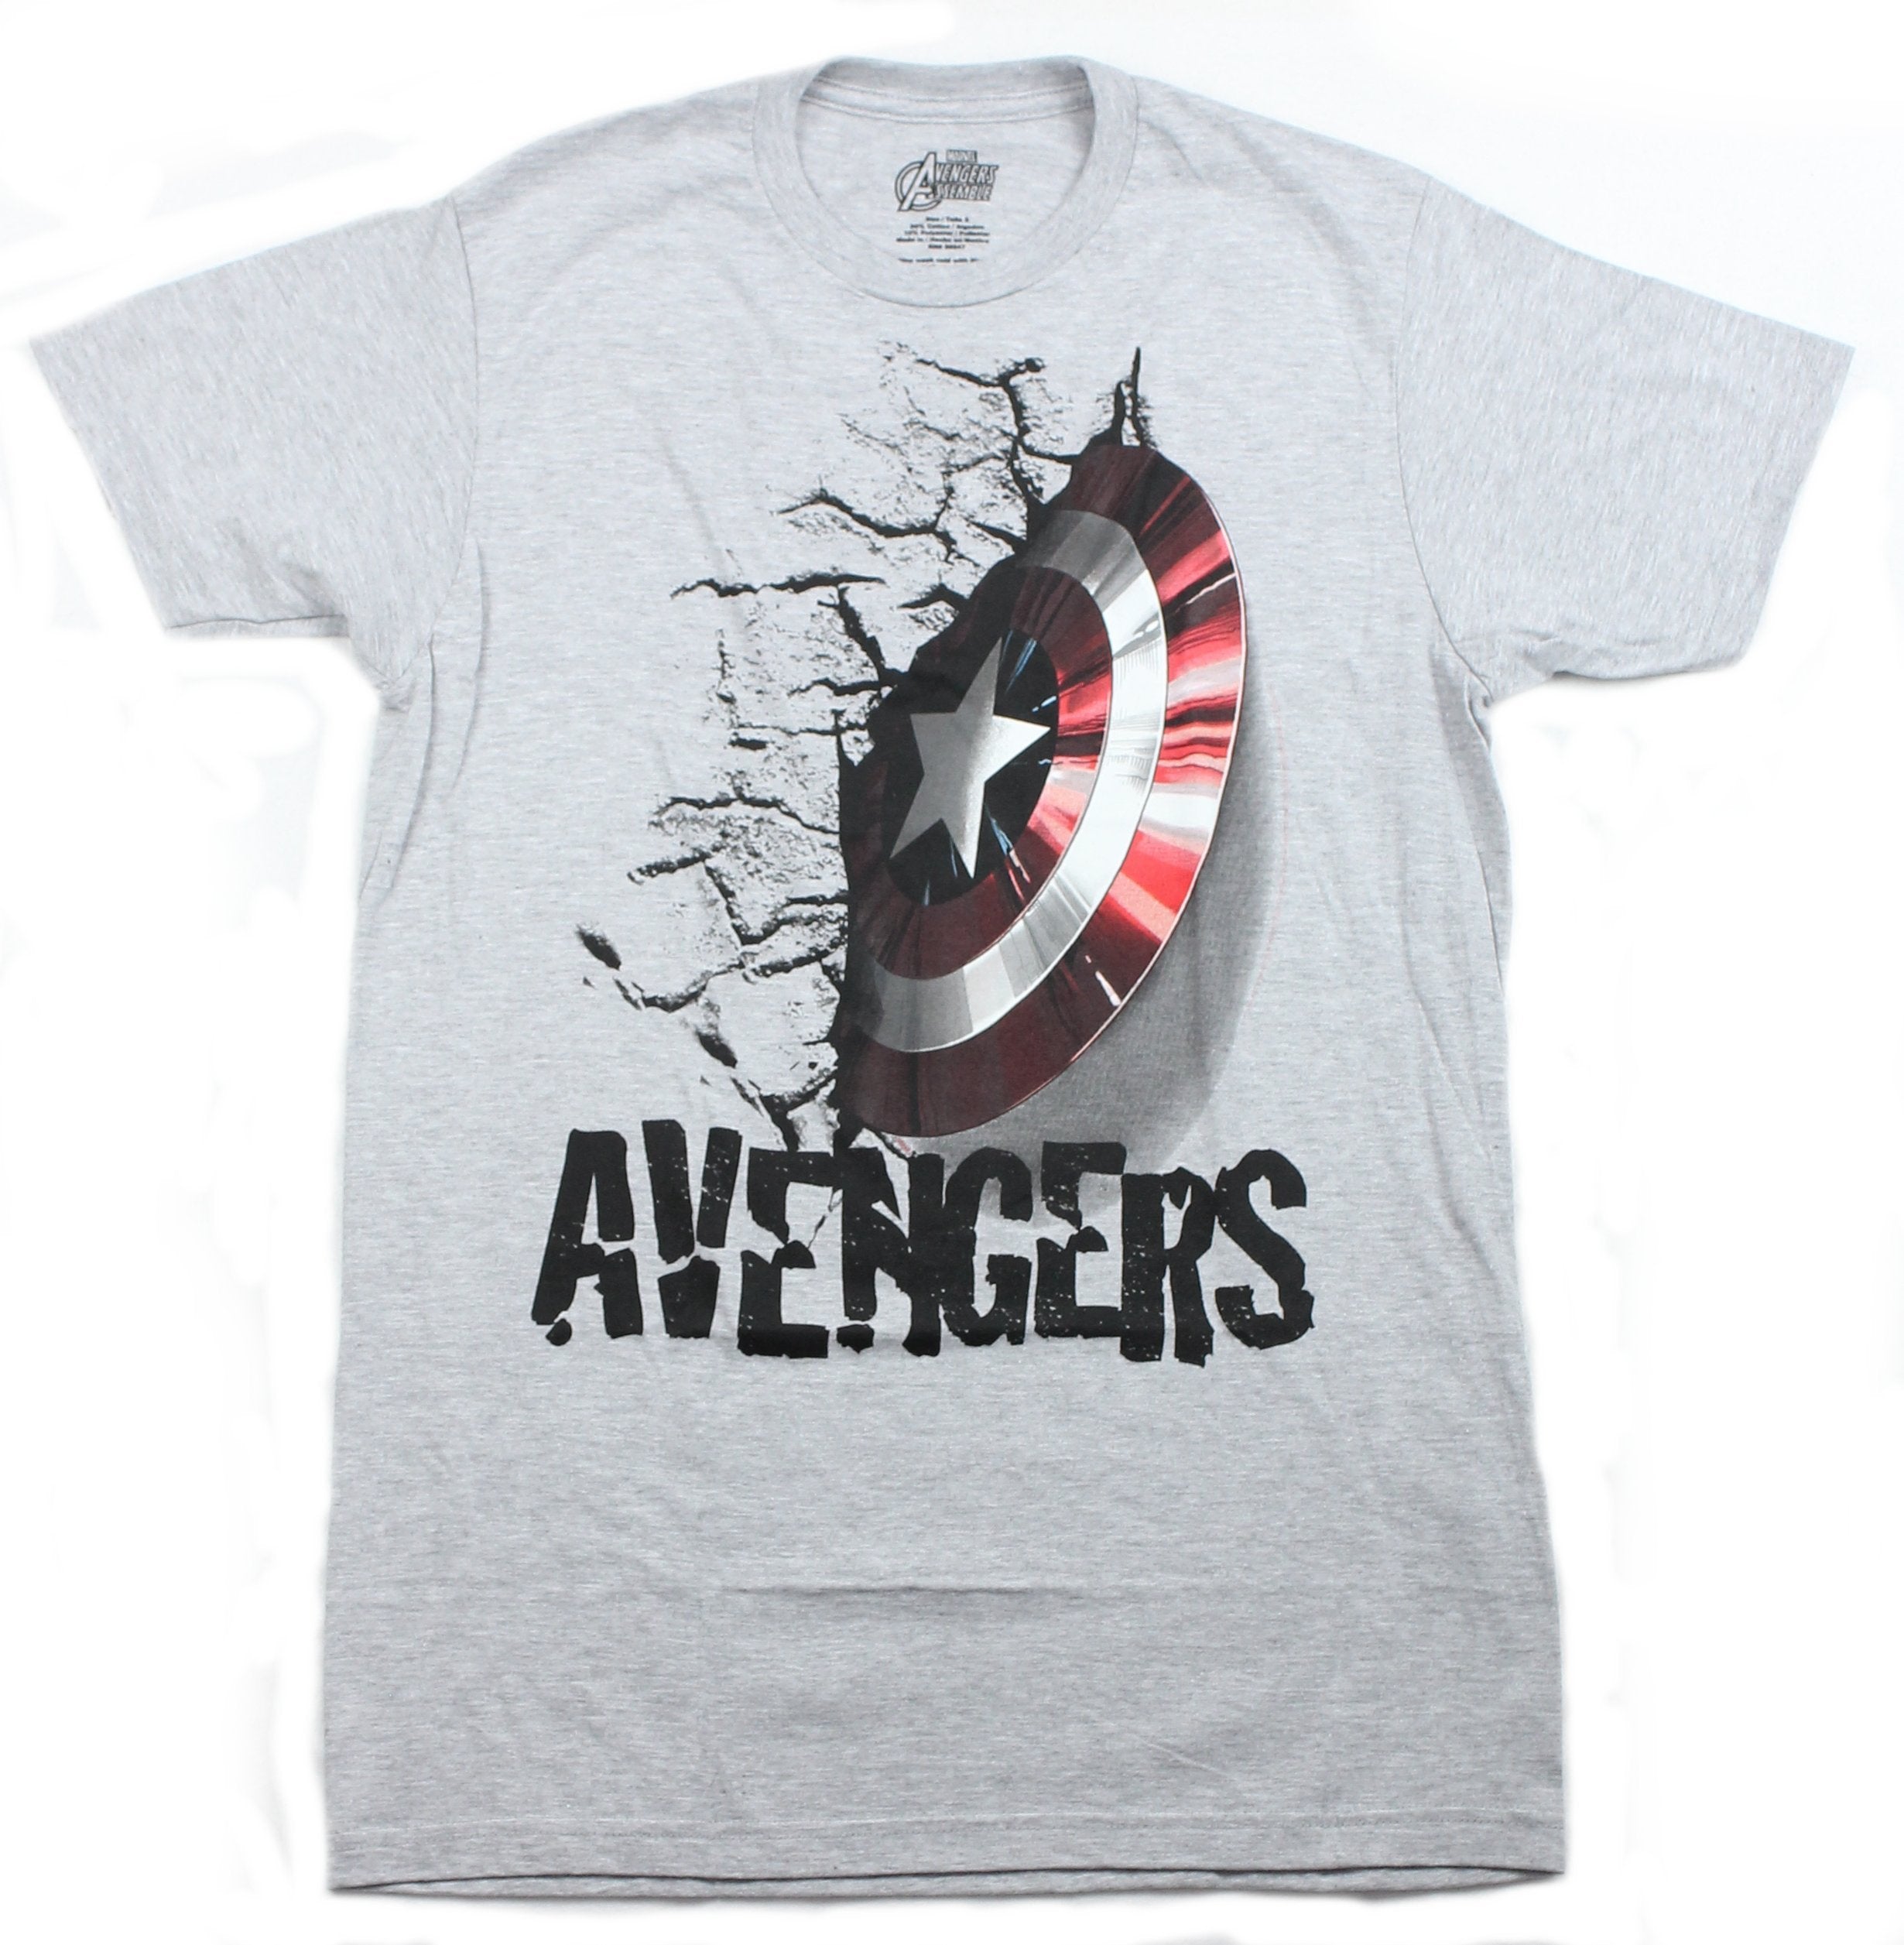 Captain America (Marvel Comics) Mens T-Shirt - Avengers Shield Stuck Wall Image